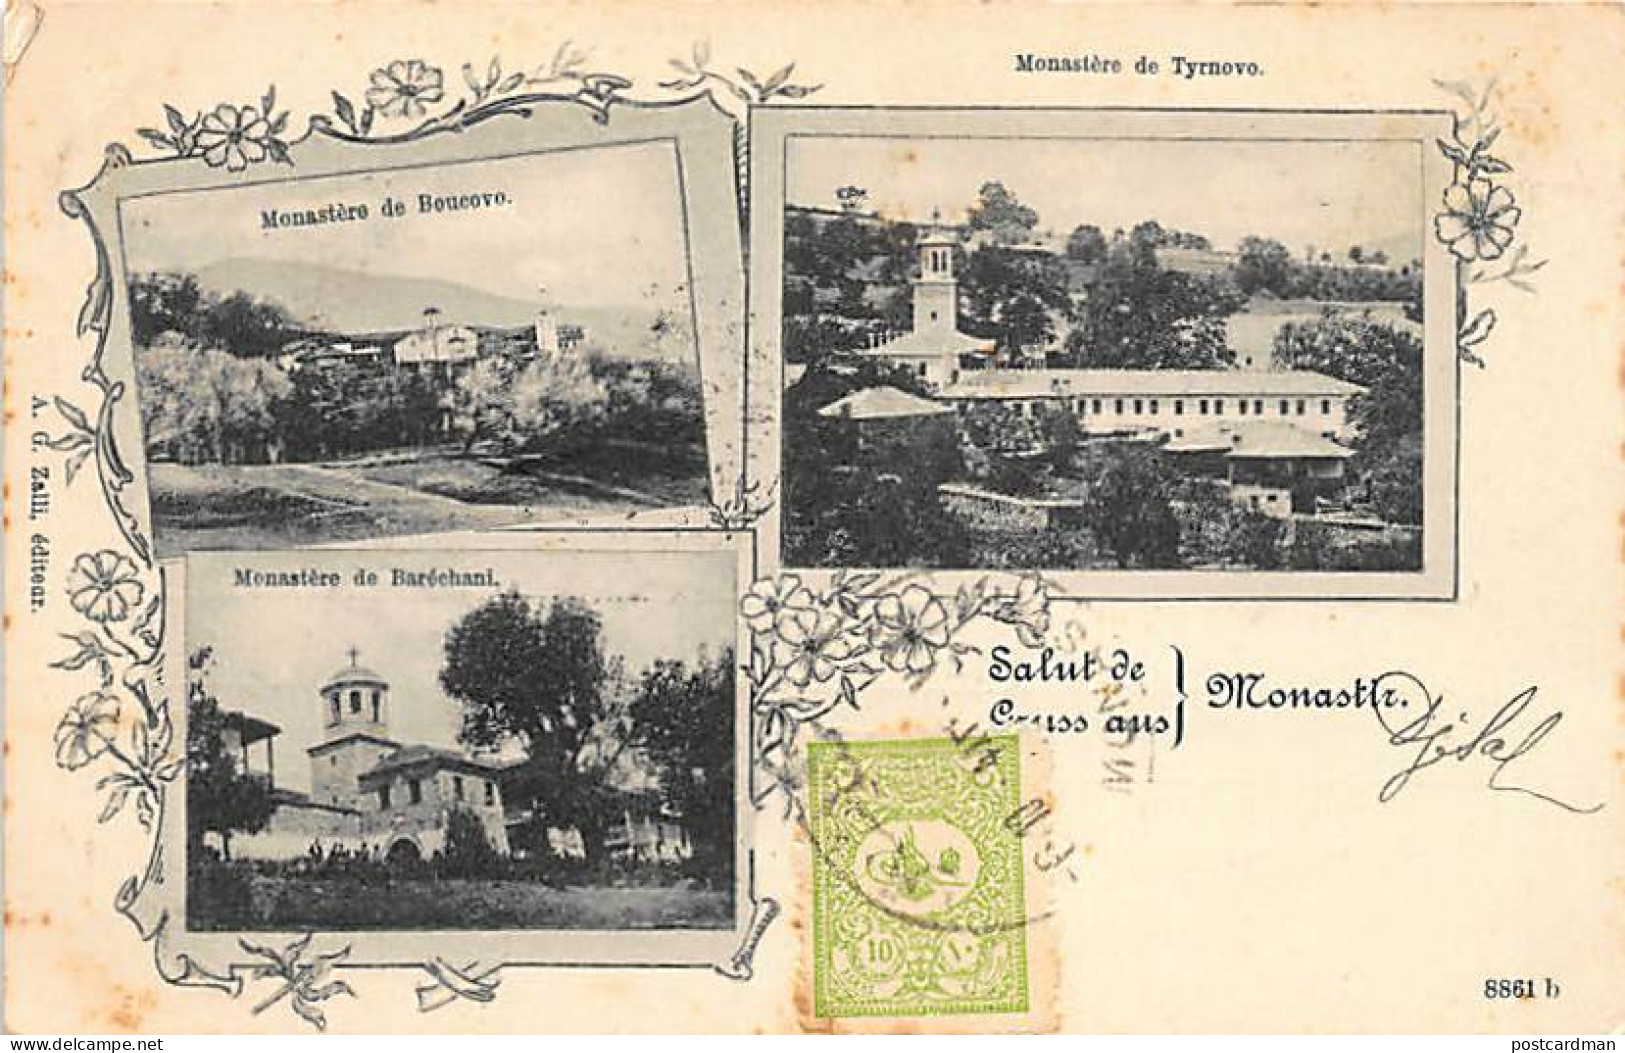 Macedonia - Gruss Aus Monastir - Bukovo Monastery - Baresani Monastery - Tirnovo Monastery - SEE STAMPS AND POSTMARKS -  - Nordmazedonien